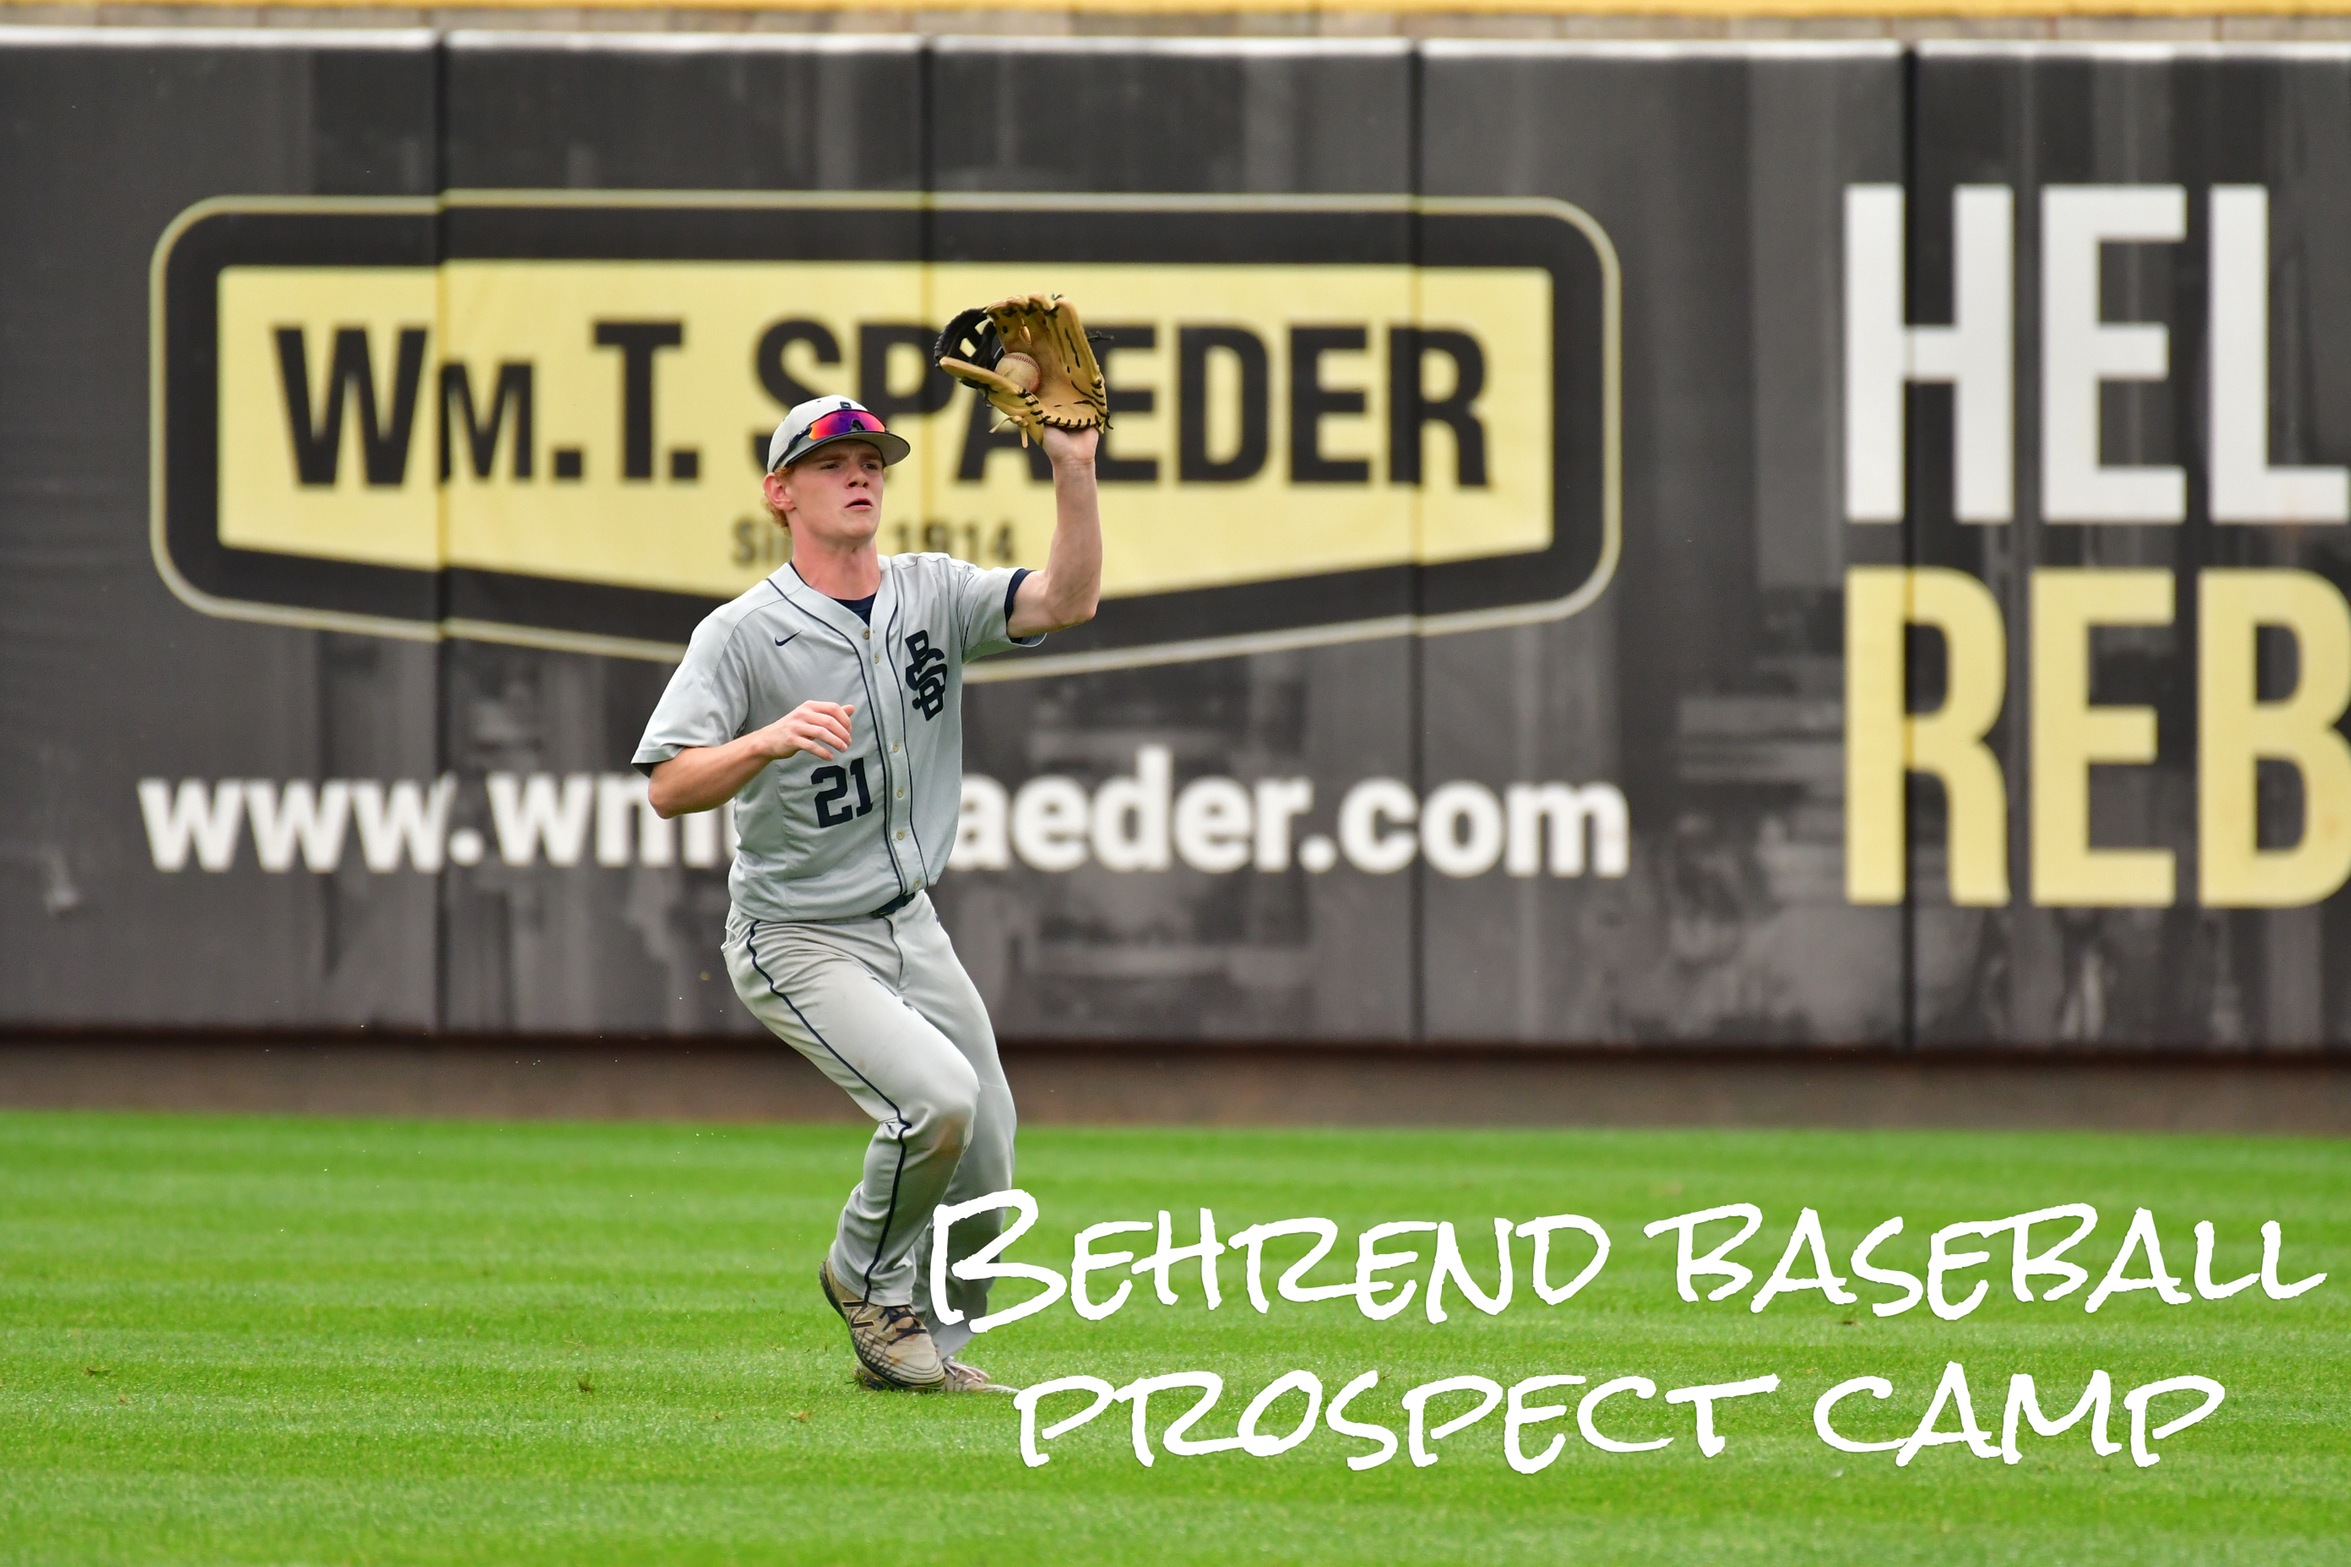 Behrend Baseball Announces Upcoming Prospect Camp